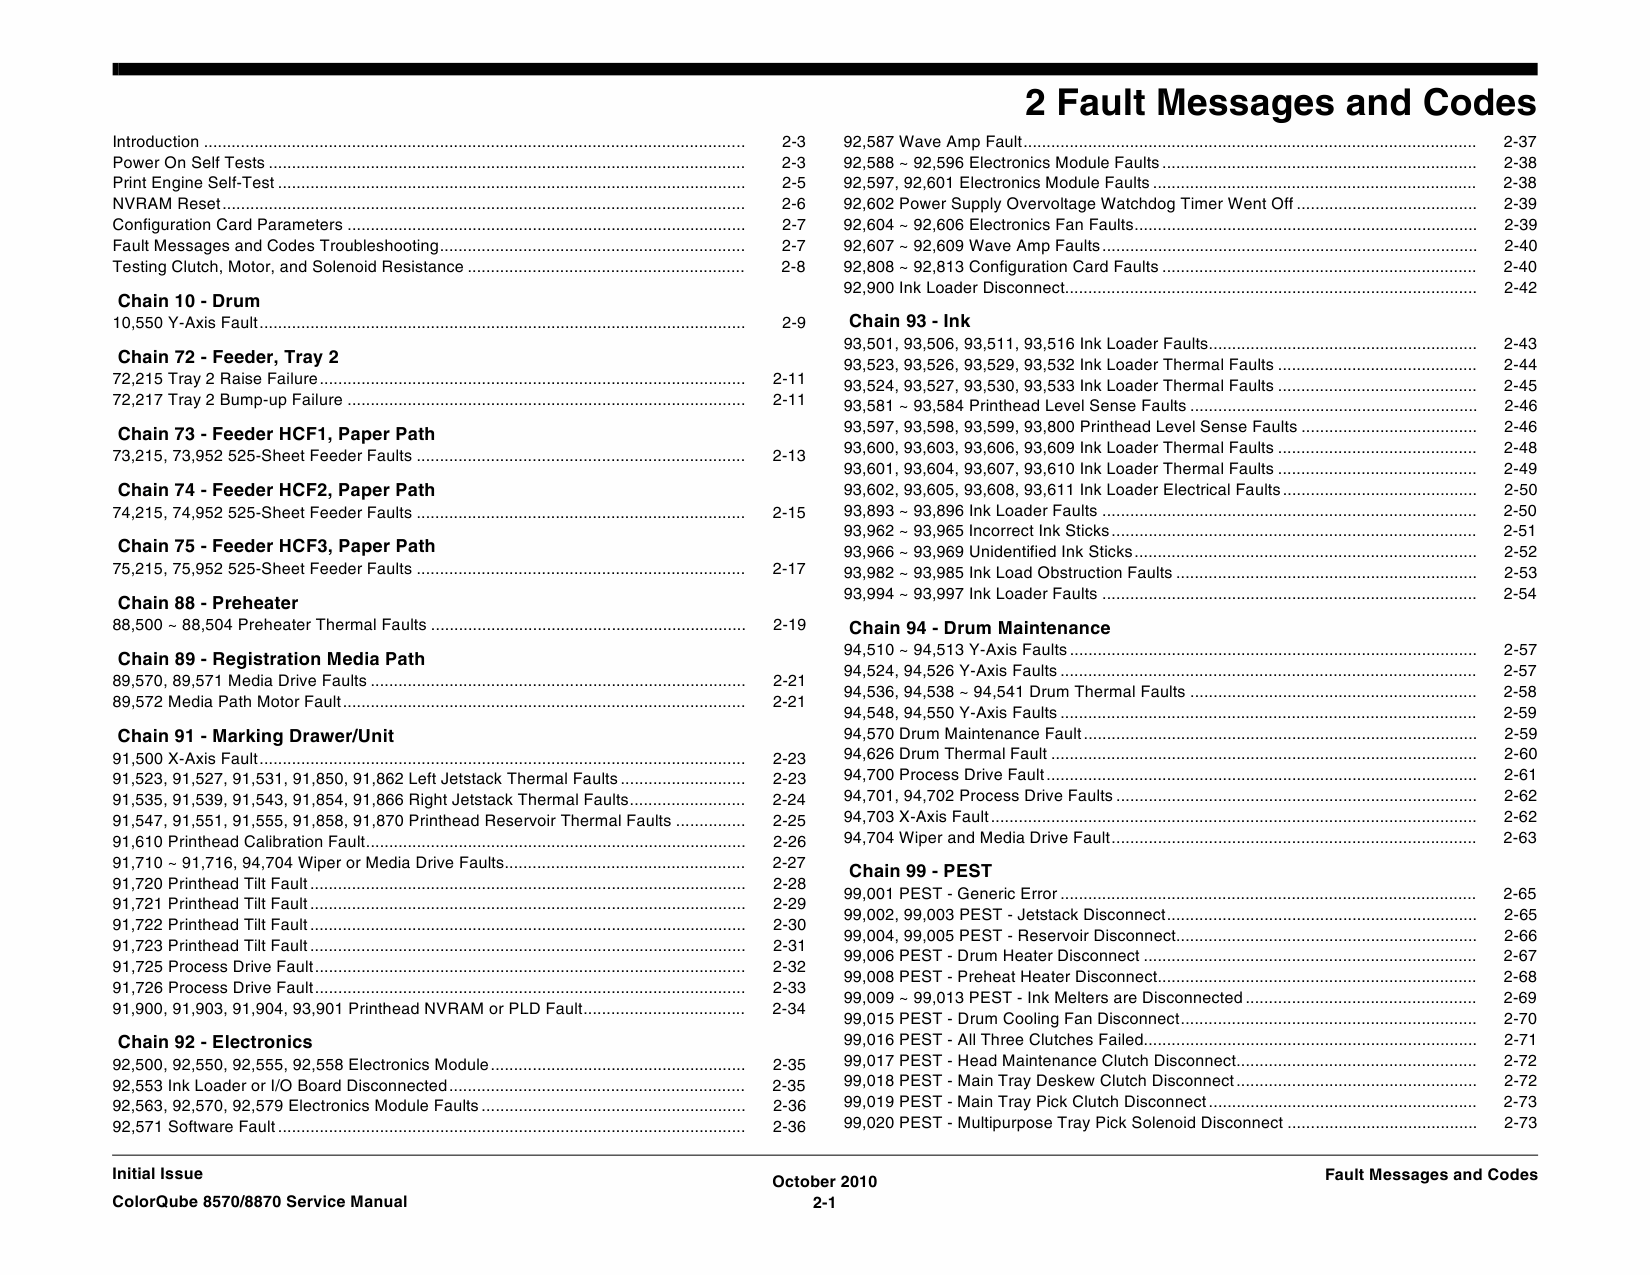 Xerox Printer ColorQube-8570 8870 Parts List and Service Manual-2